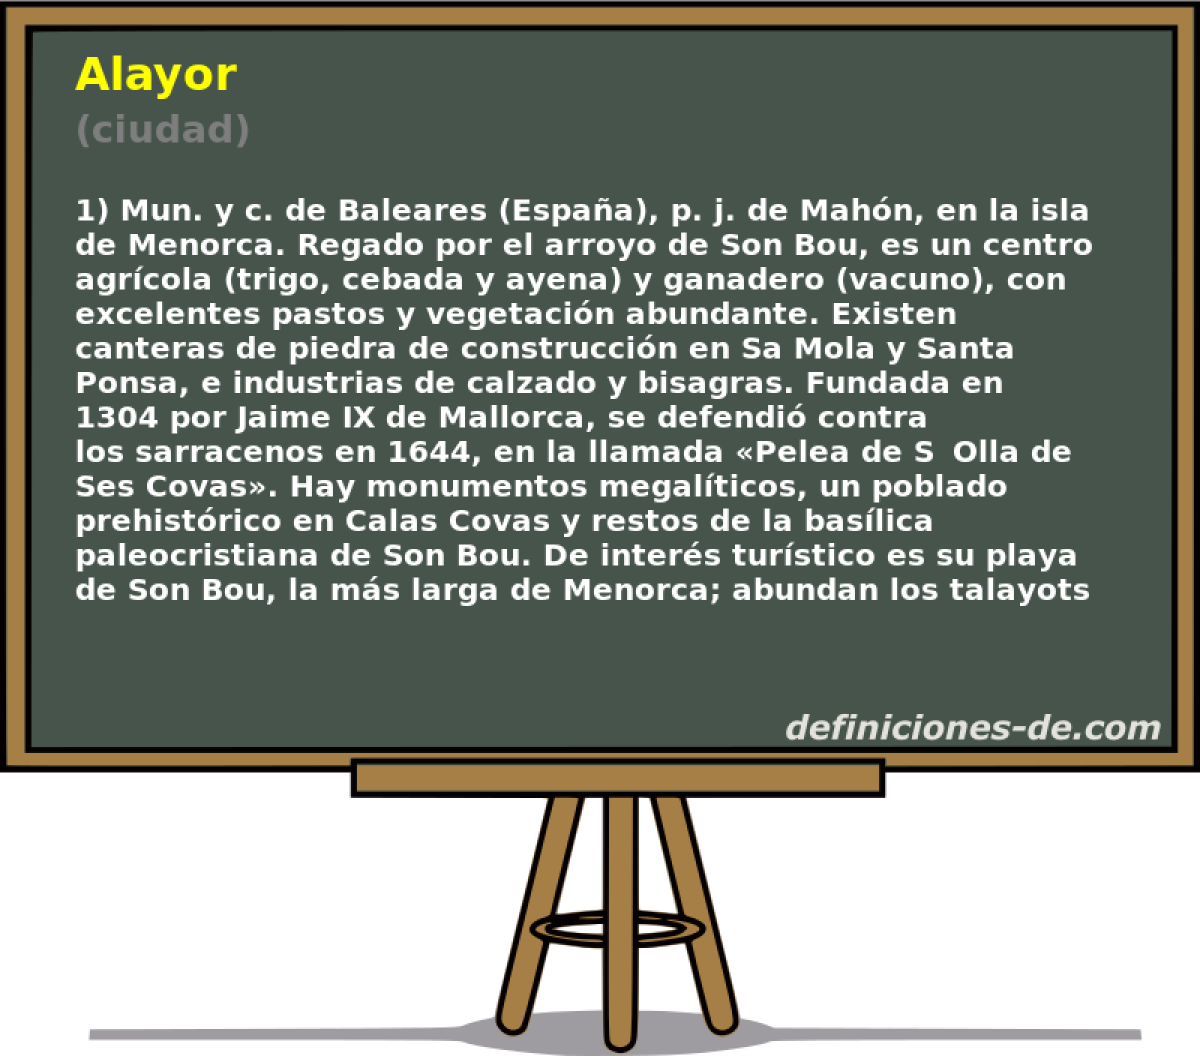 Alayor (ciudad)